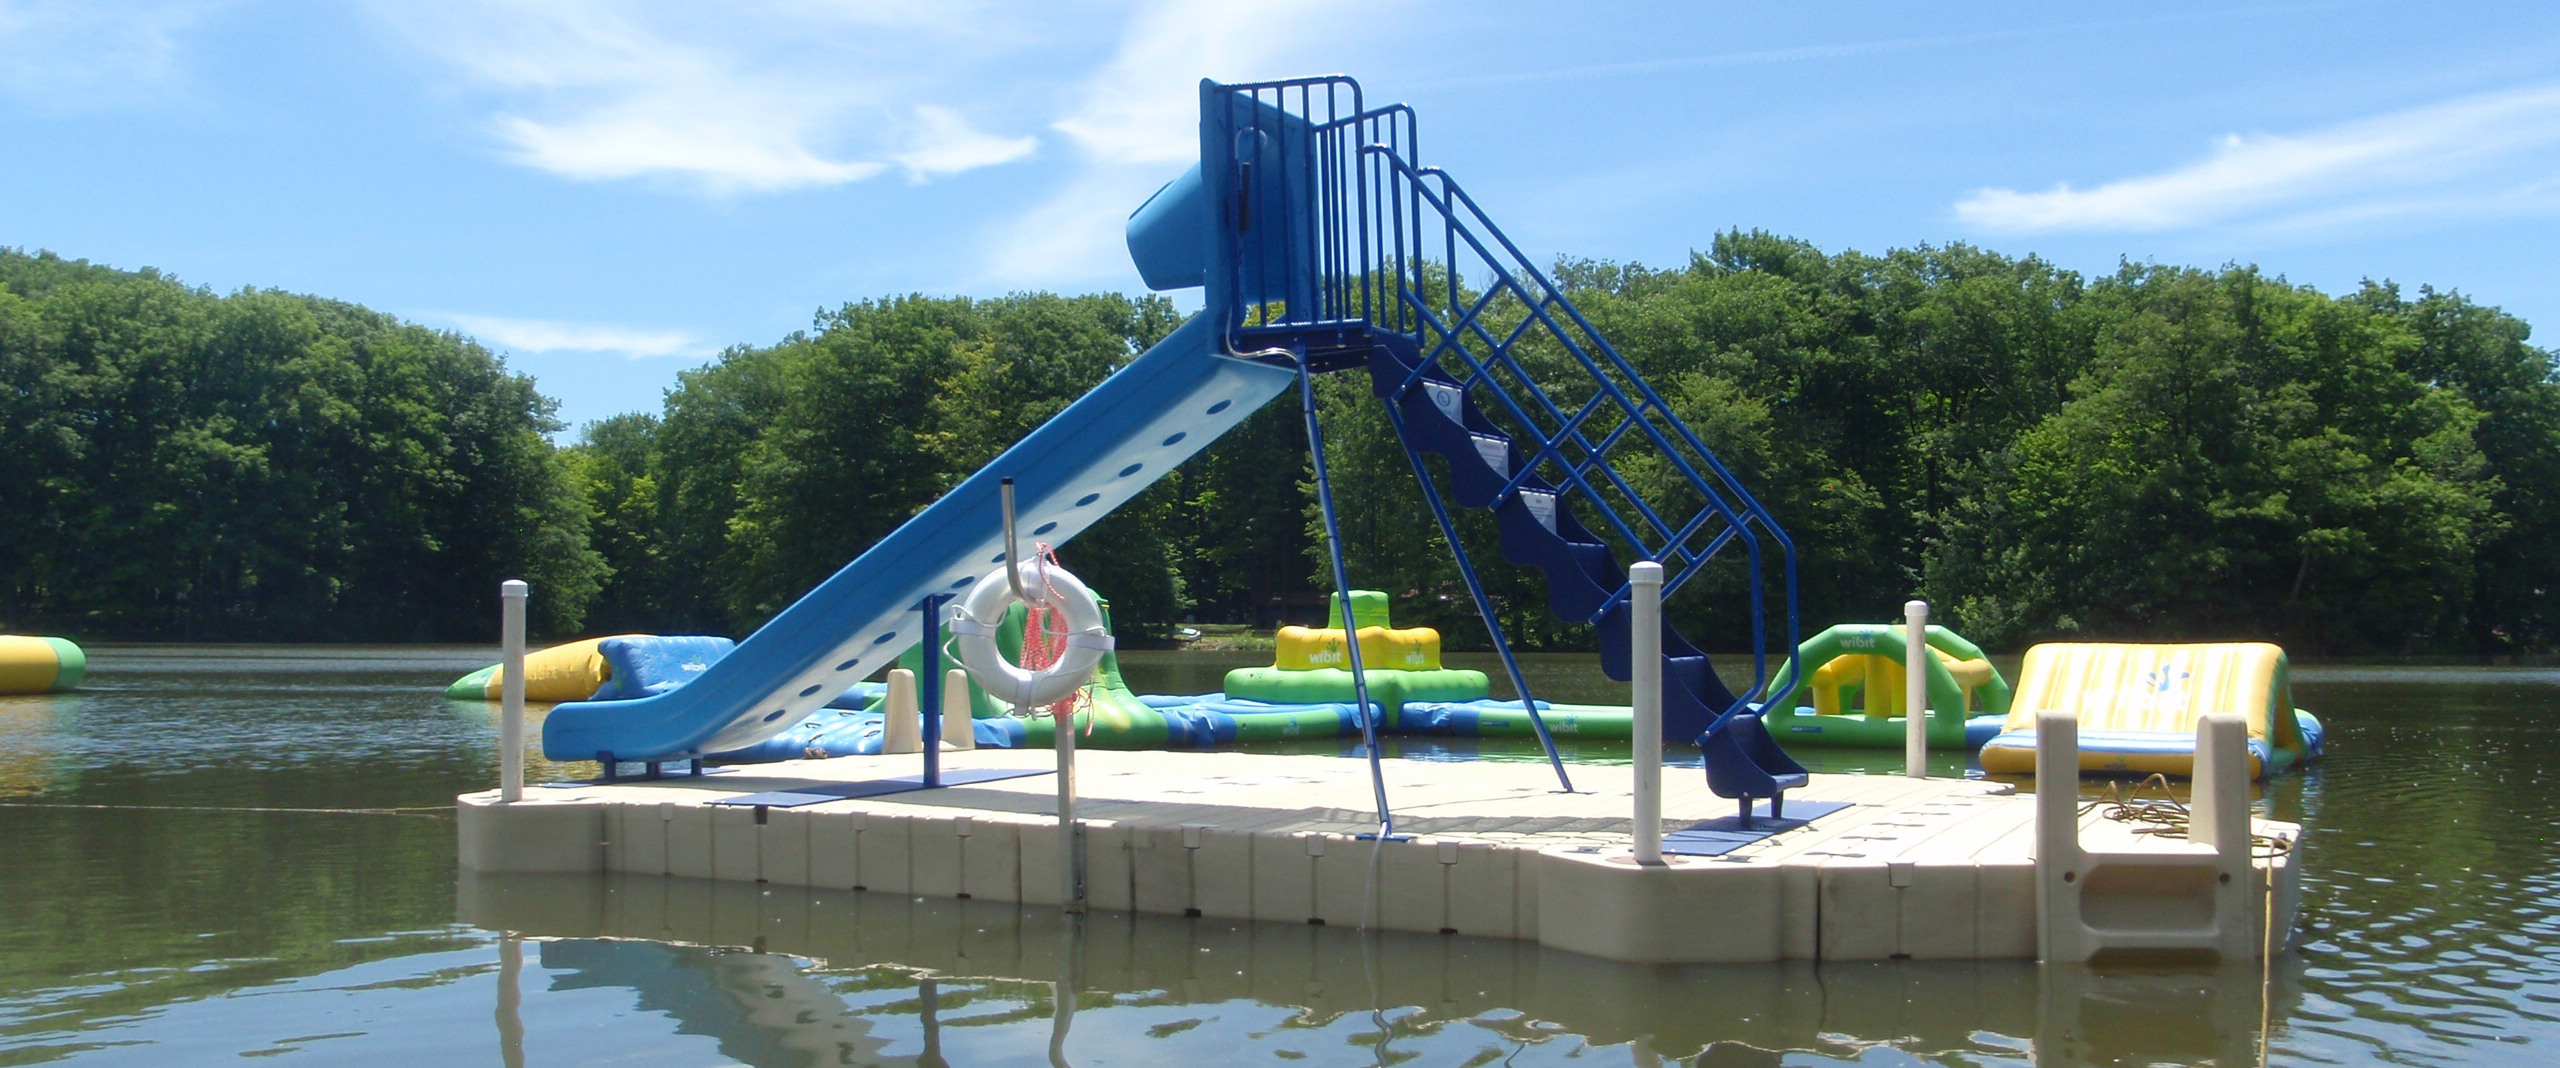 plastic dock with slide